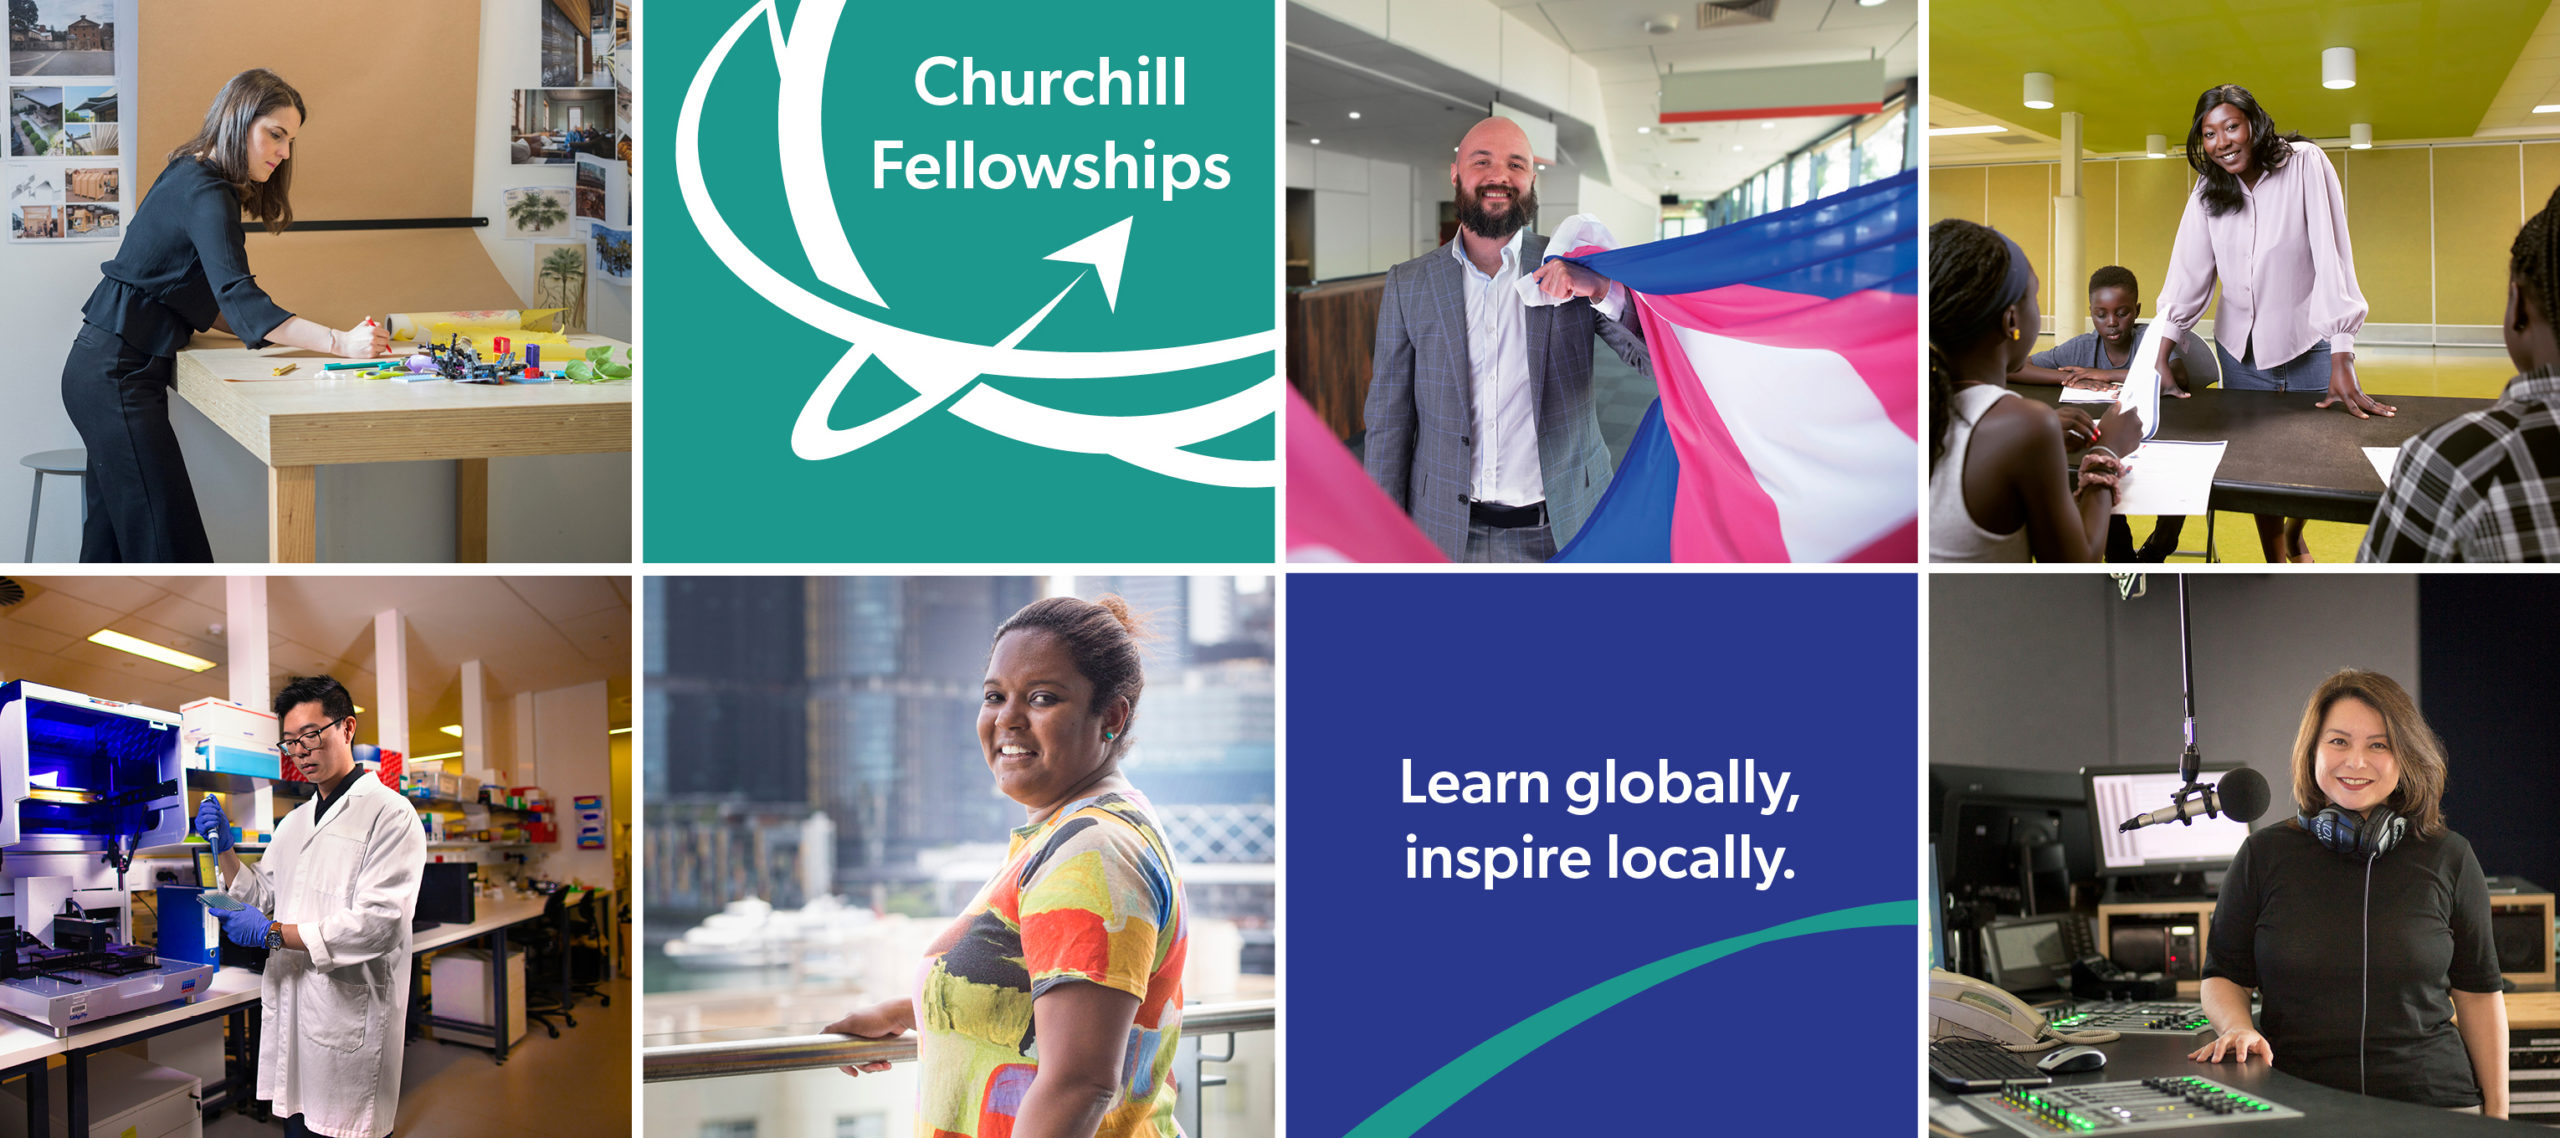 2020 Churchill Fellowship Award Recipients Announced featured image